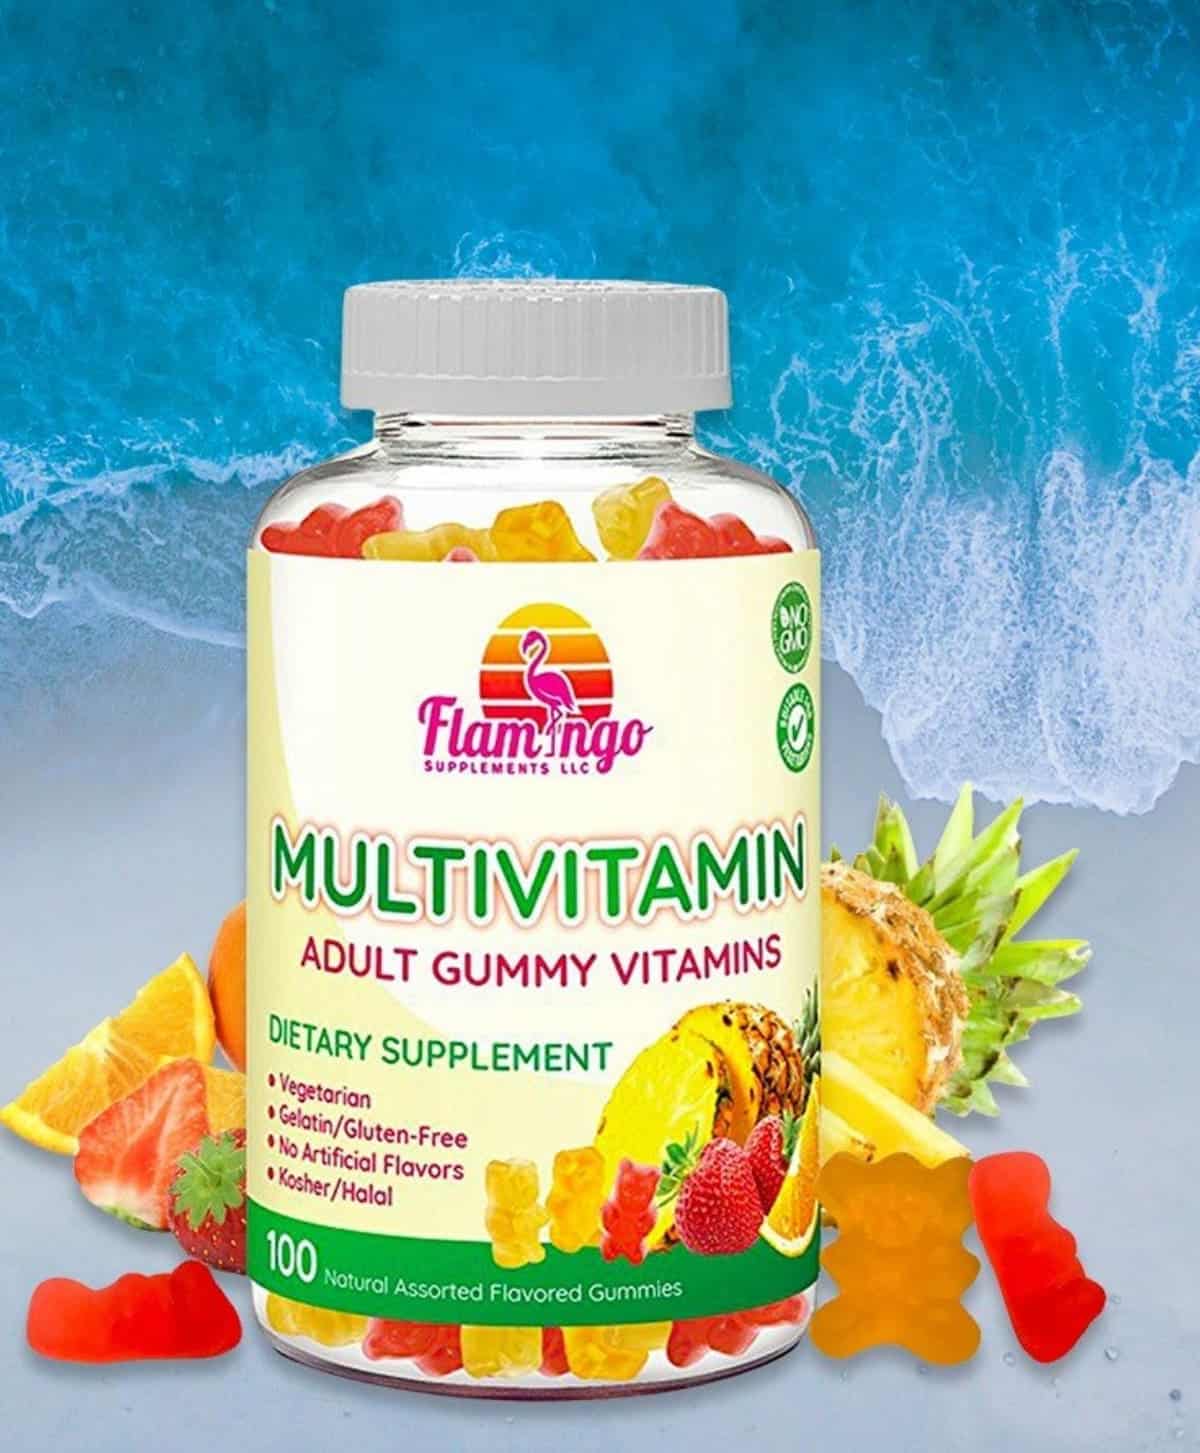 A bottle of Flamingo Supplements brand vegan gummy multivitamins.